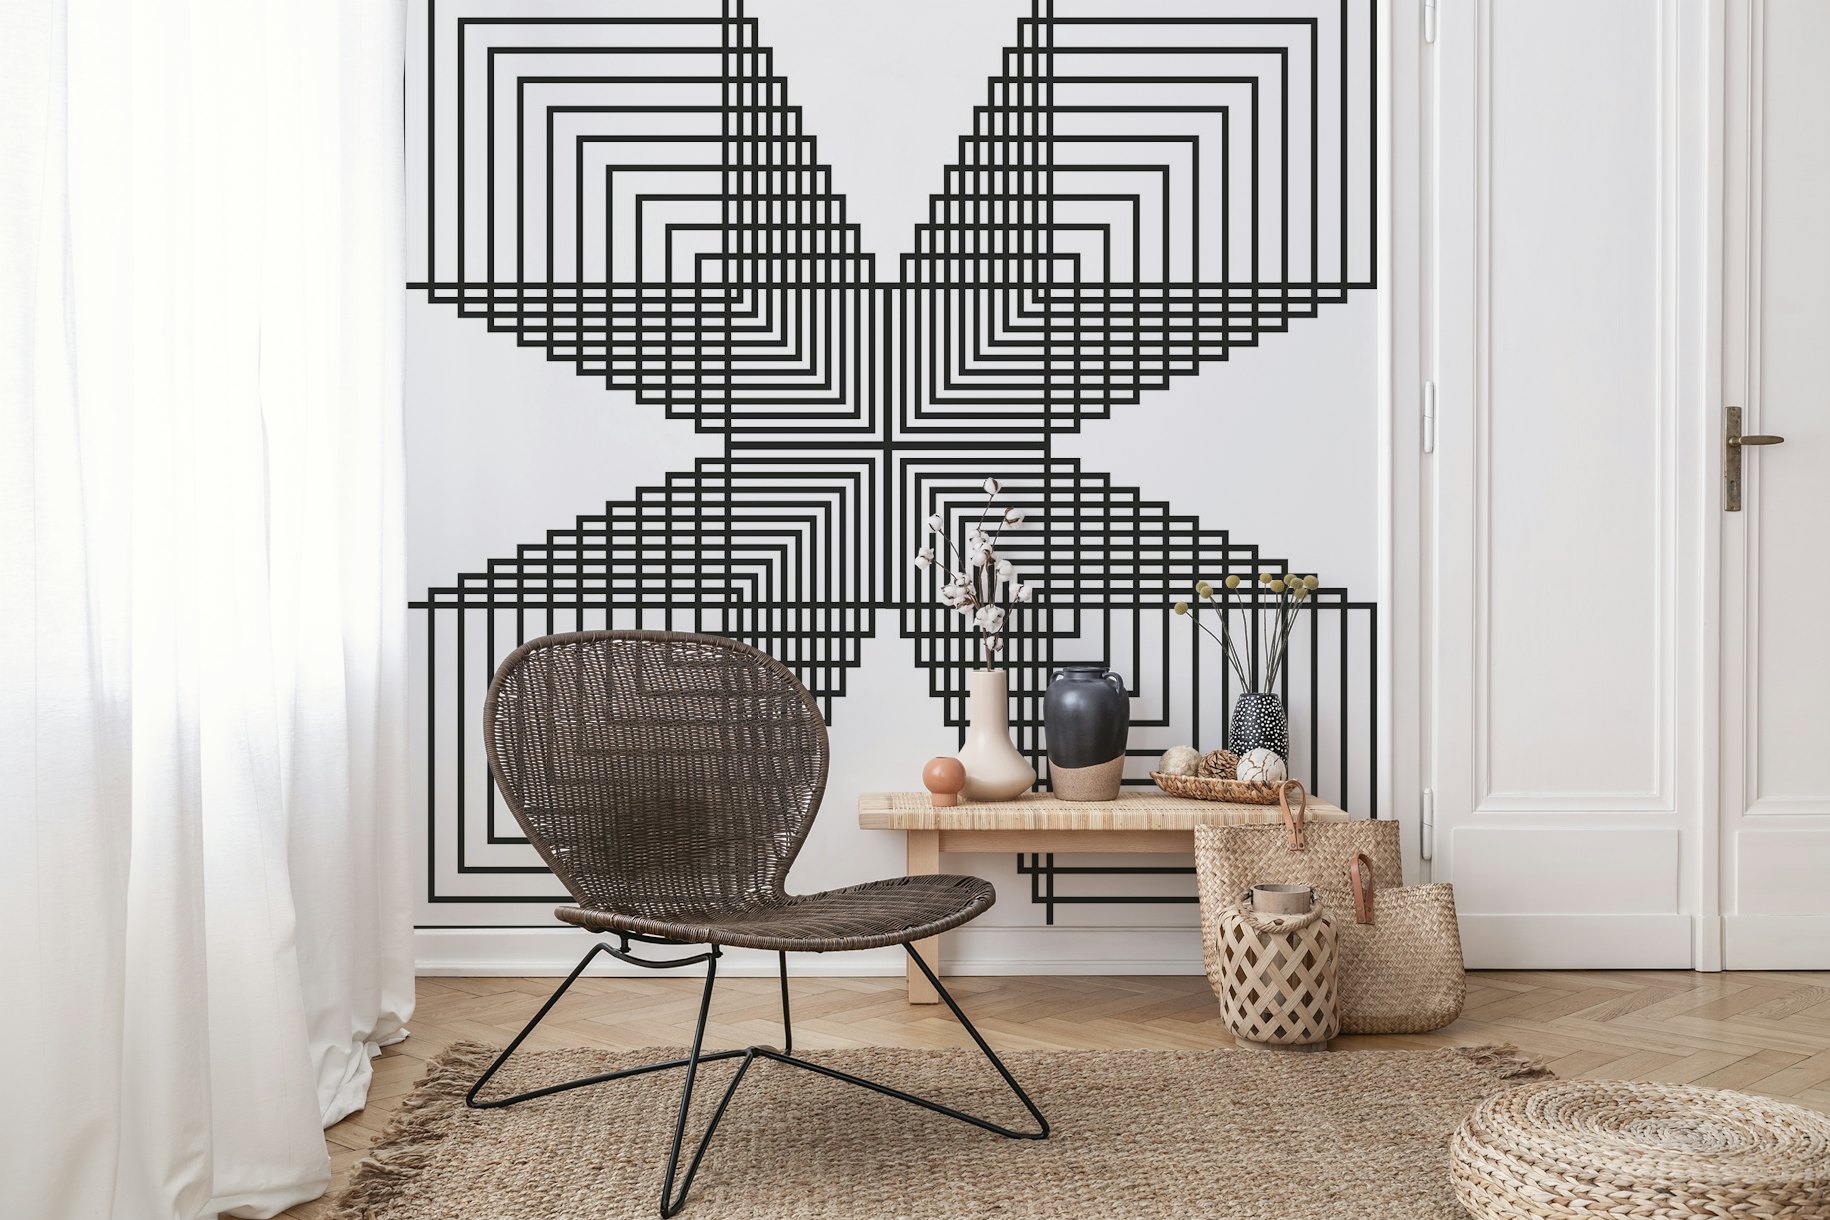 Geometry artwork lineart wallpaper